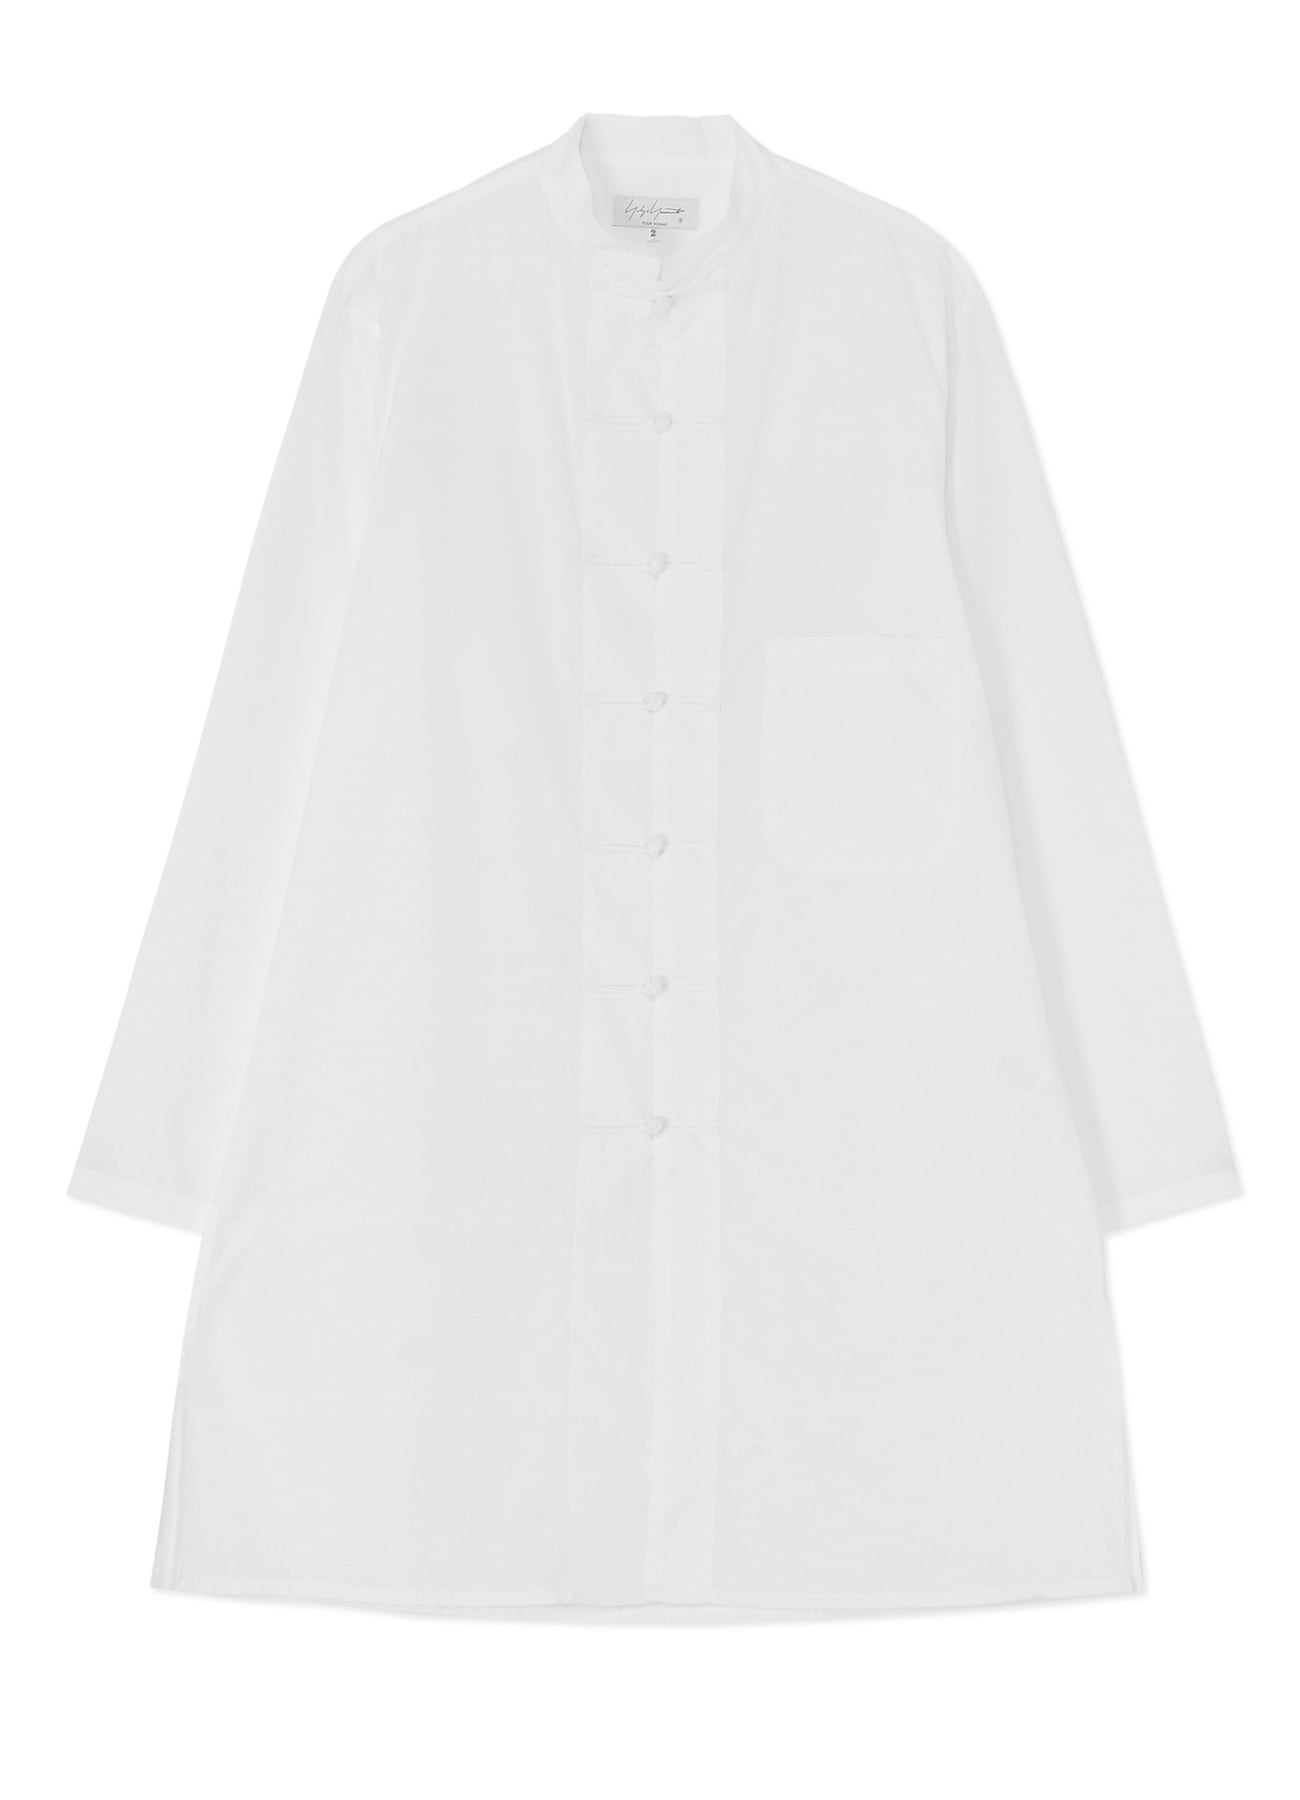 MANDARIN COLLAR SHIRT WITH CHEST POCKET(S White): Yohji Yamamoto 